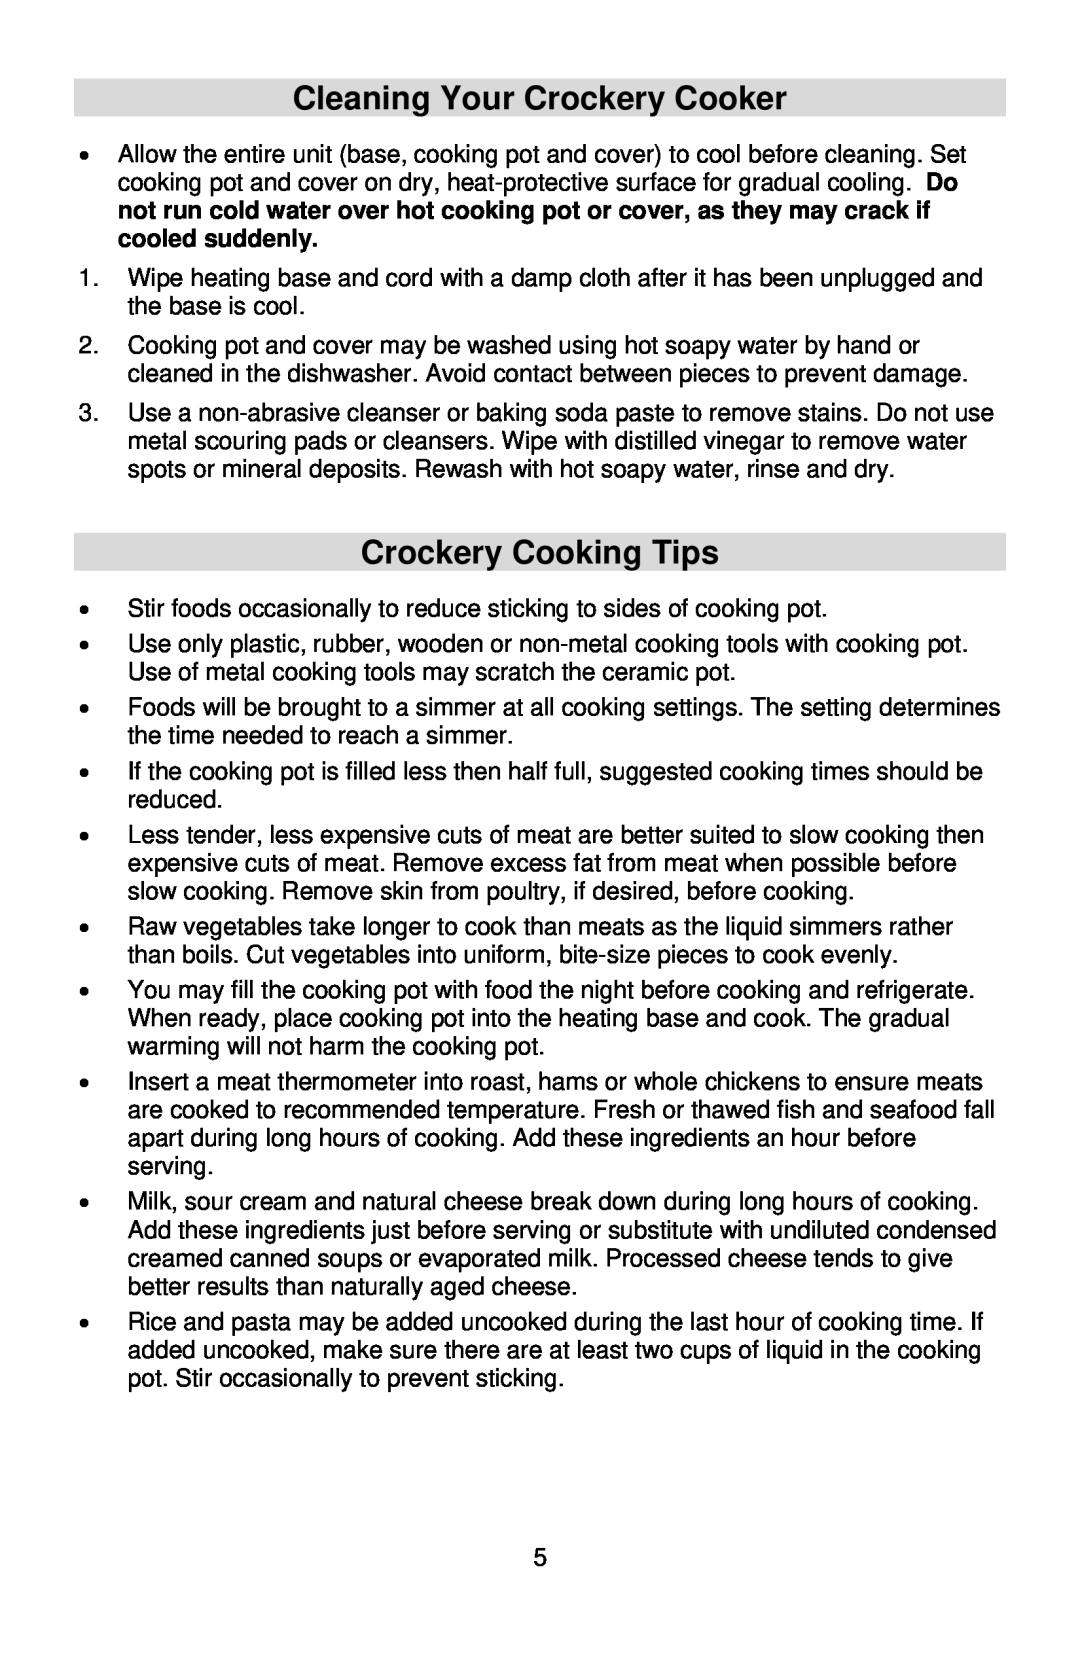 West Bend 3-4 Quart Crockery Cooker instruction manual Cleaning Your Crockery Cooker, Crockery Cooking Tips 